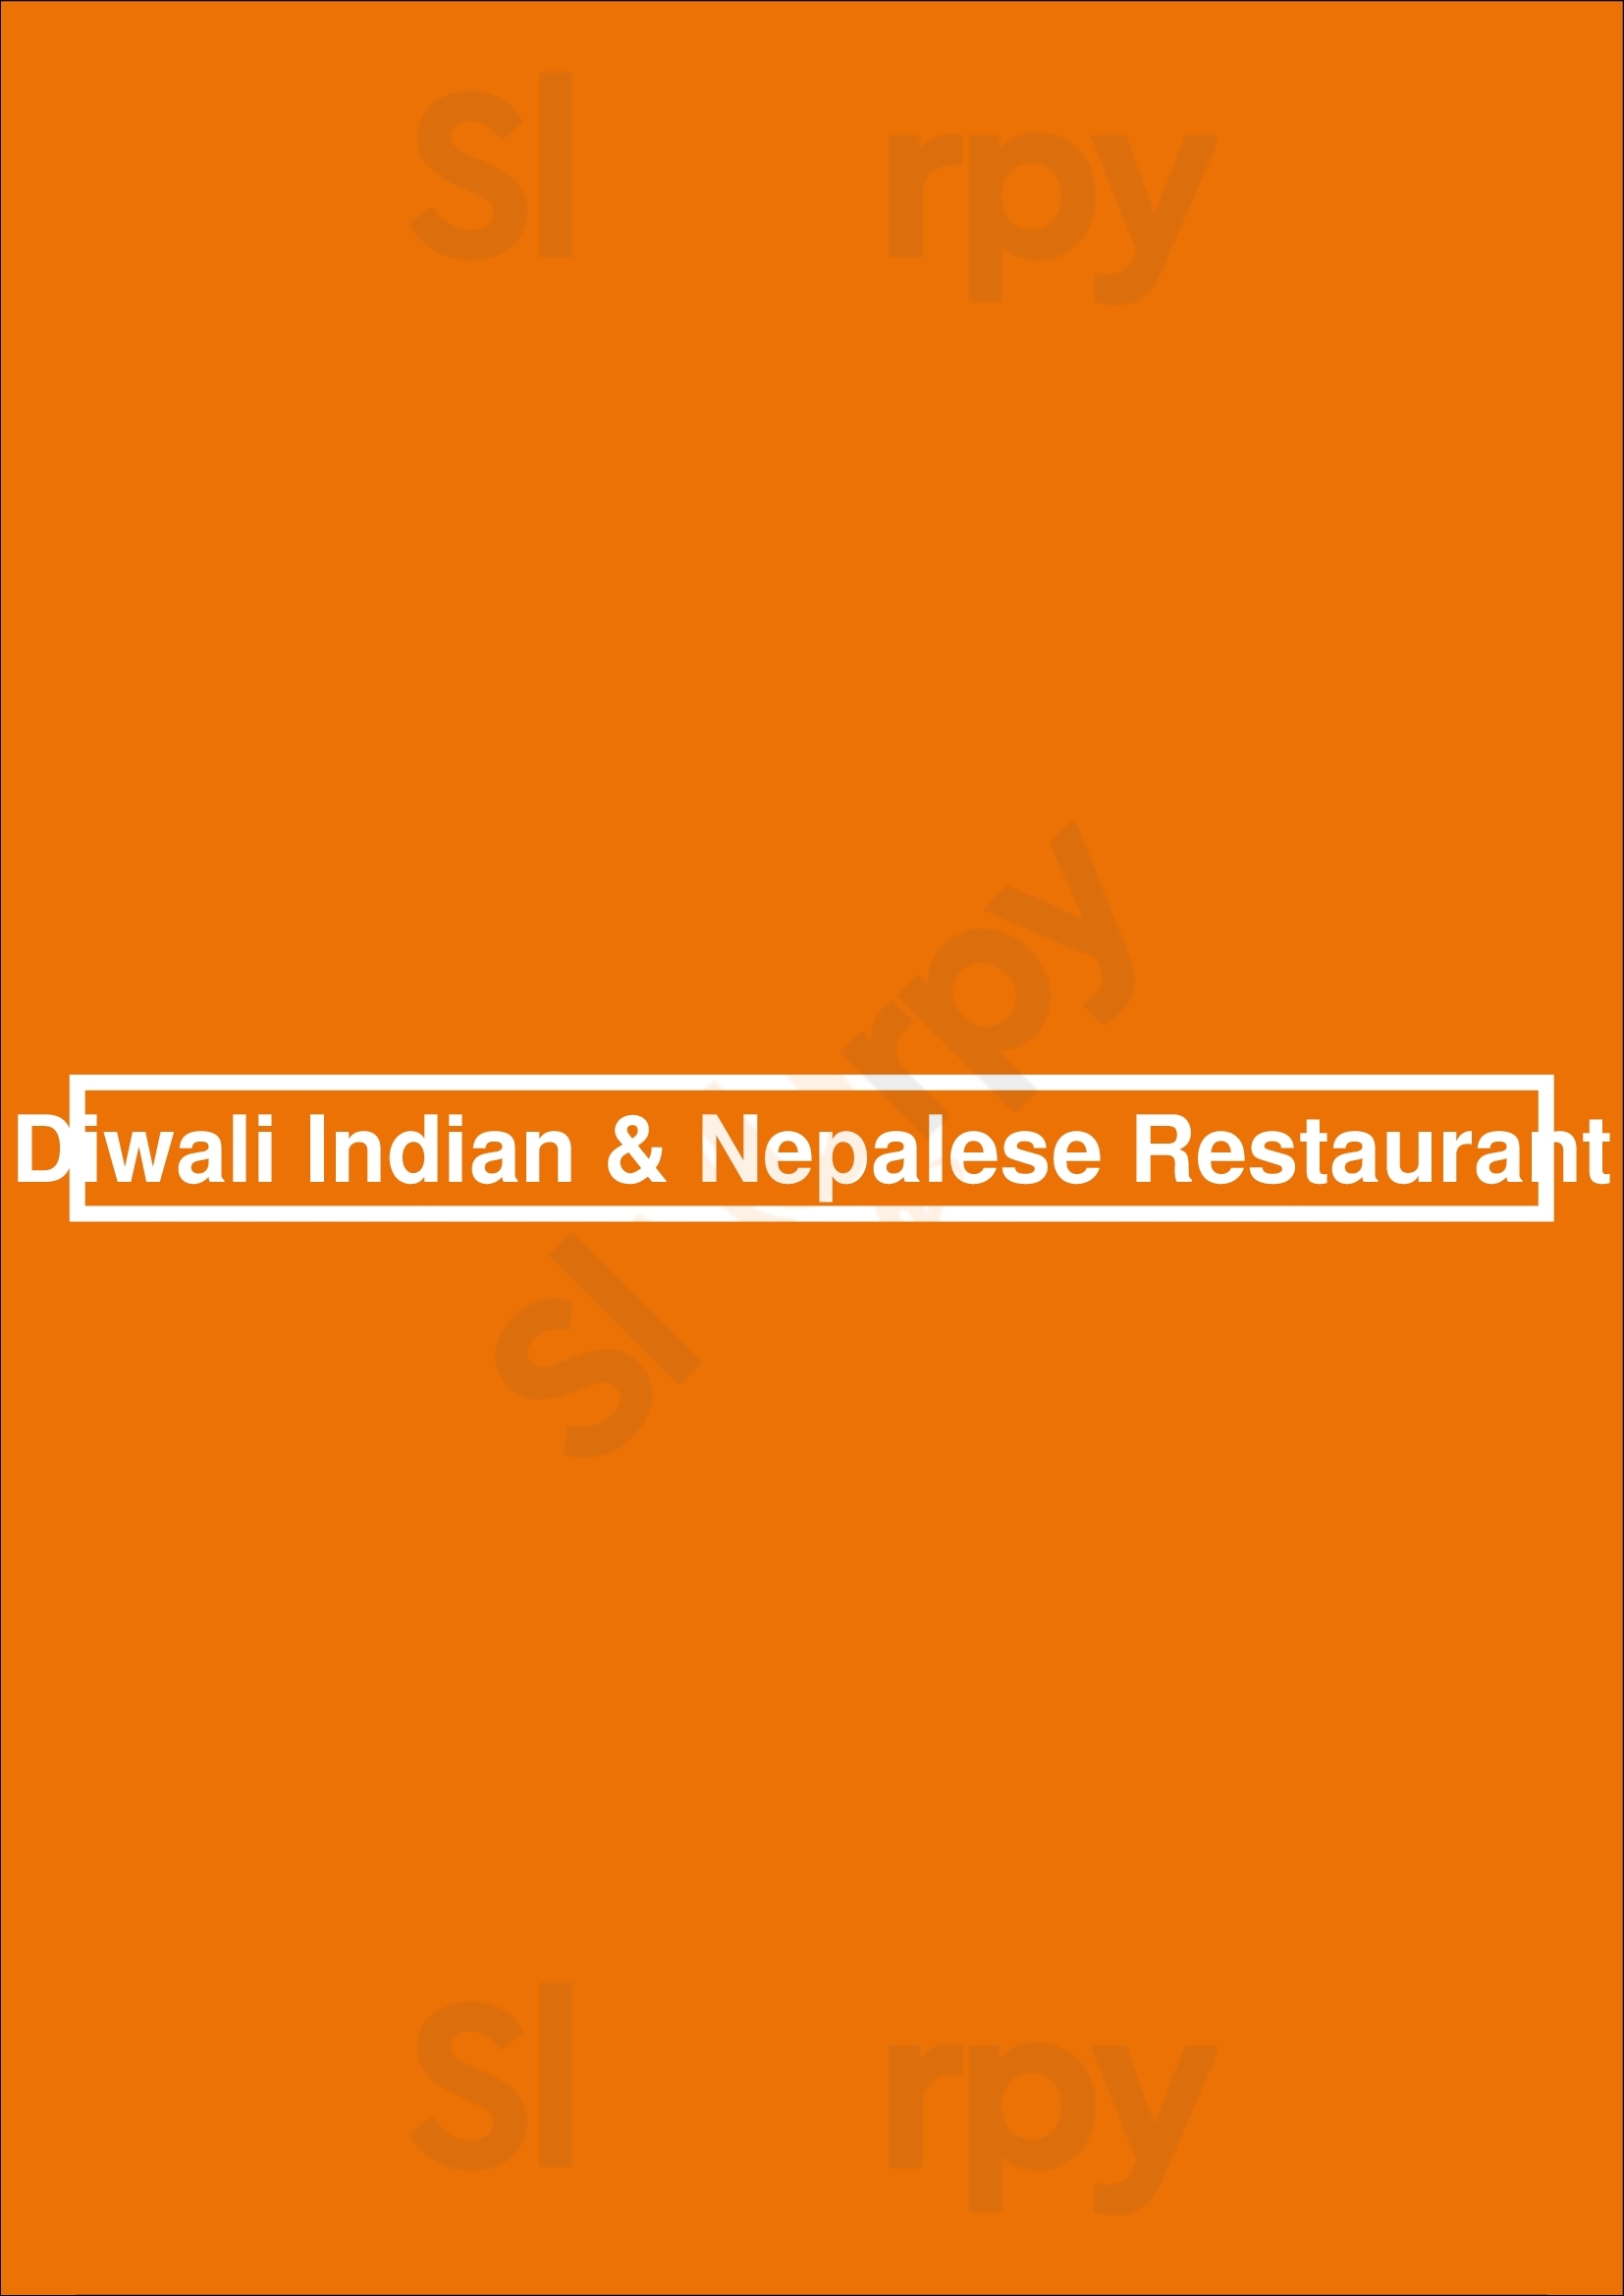 Diwali Indian & Nepalese Restaurant Dublin Menu - 1